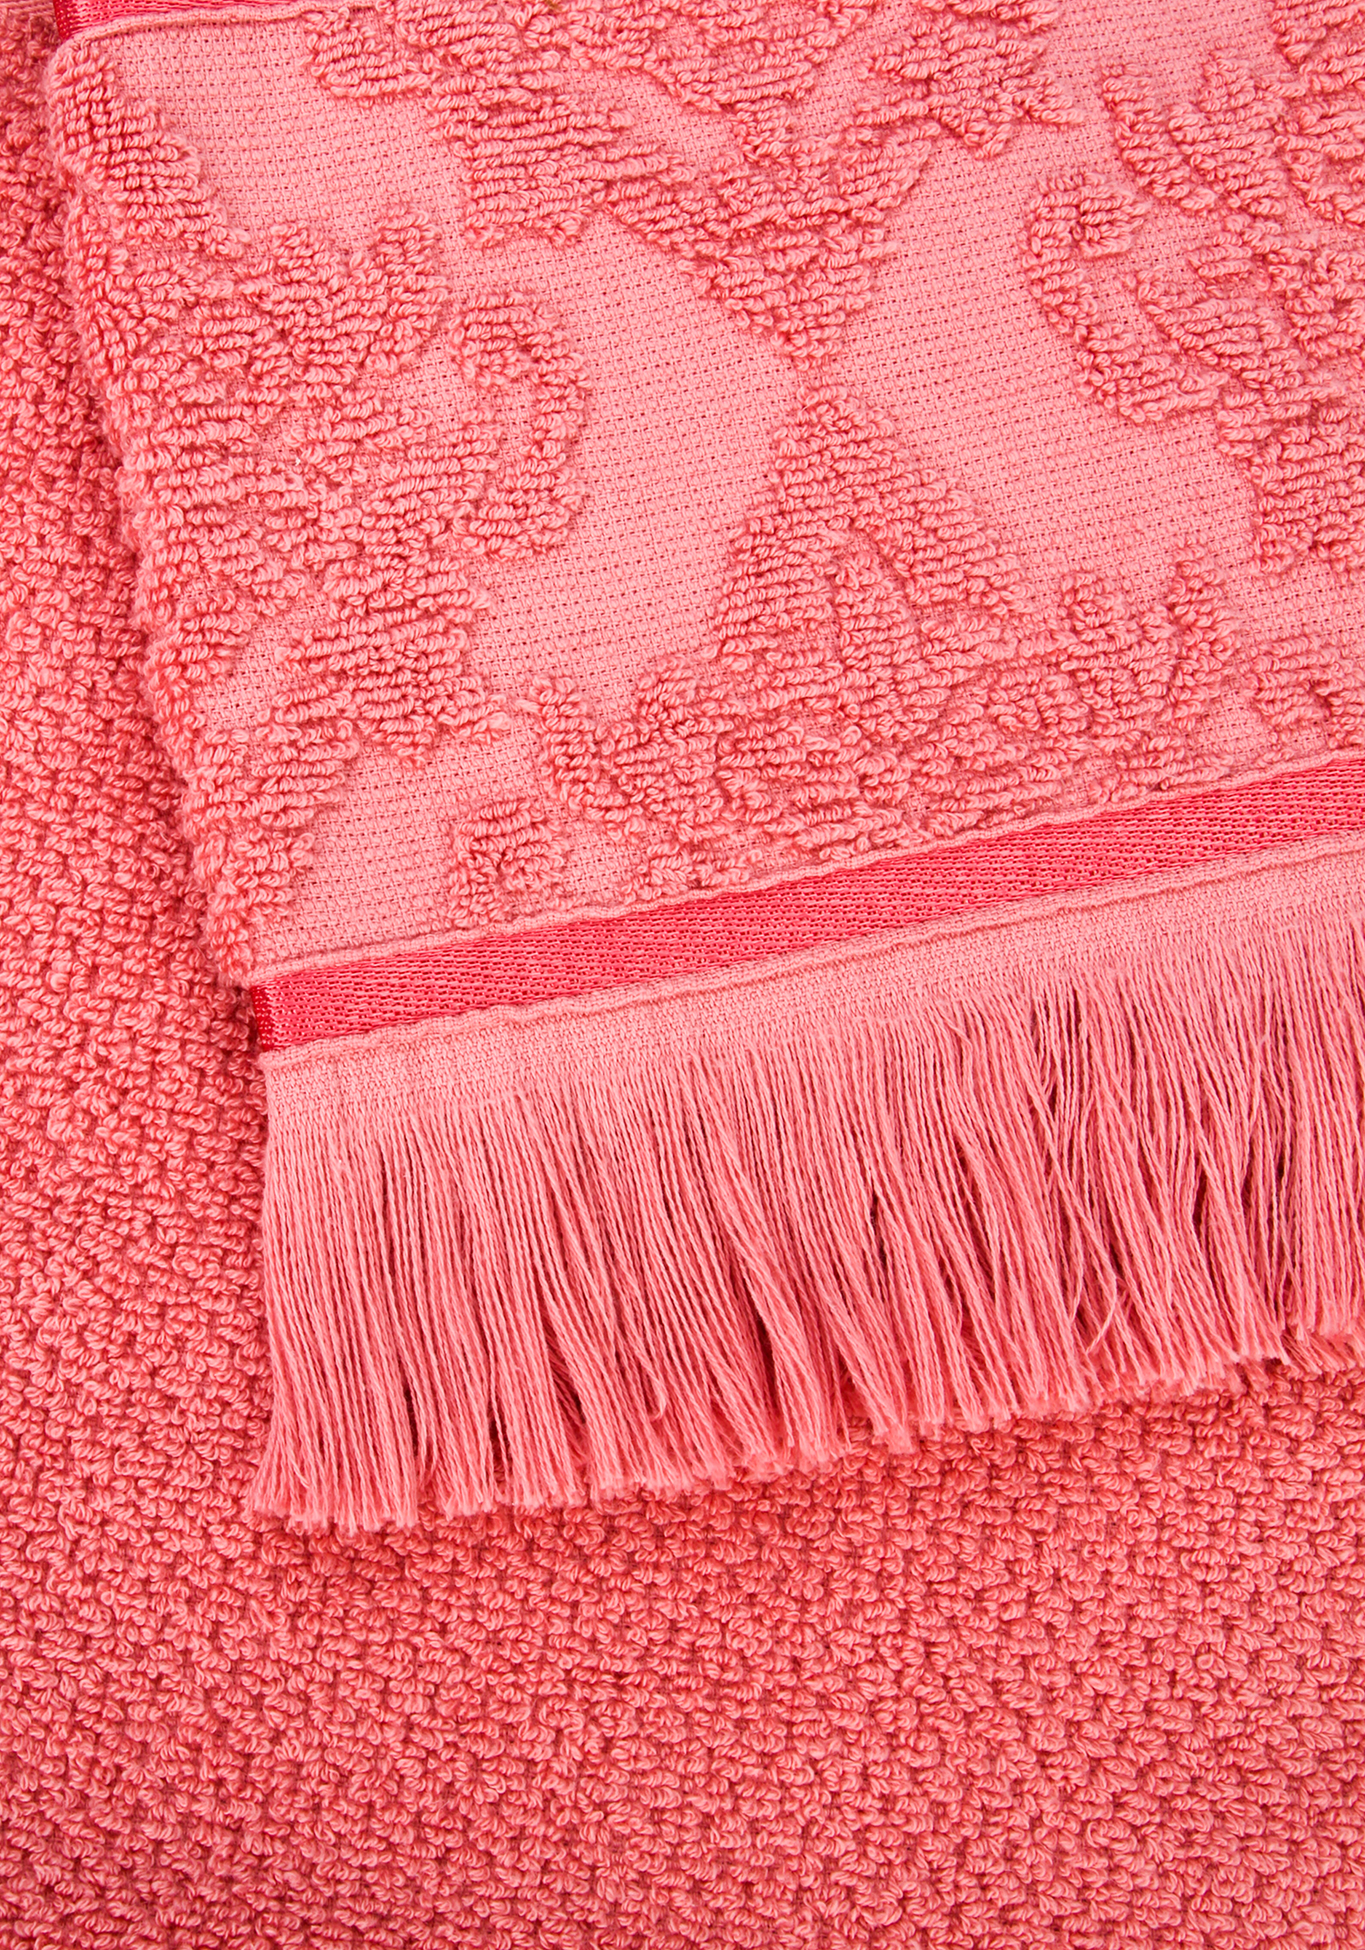 Полотенце махровое "Премиум-качество" Comfort Linе, цвет лаванда, размер 50 x 90 - фото 4